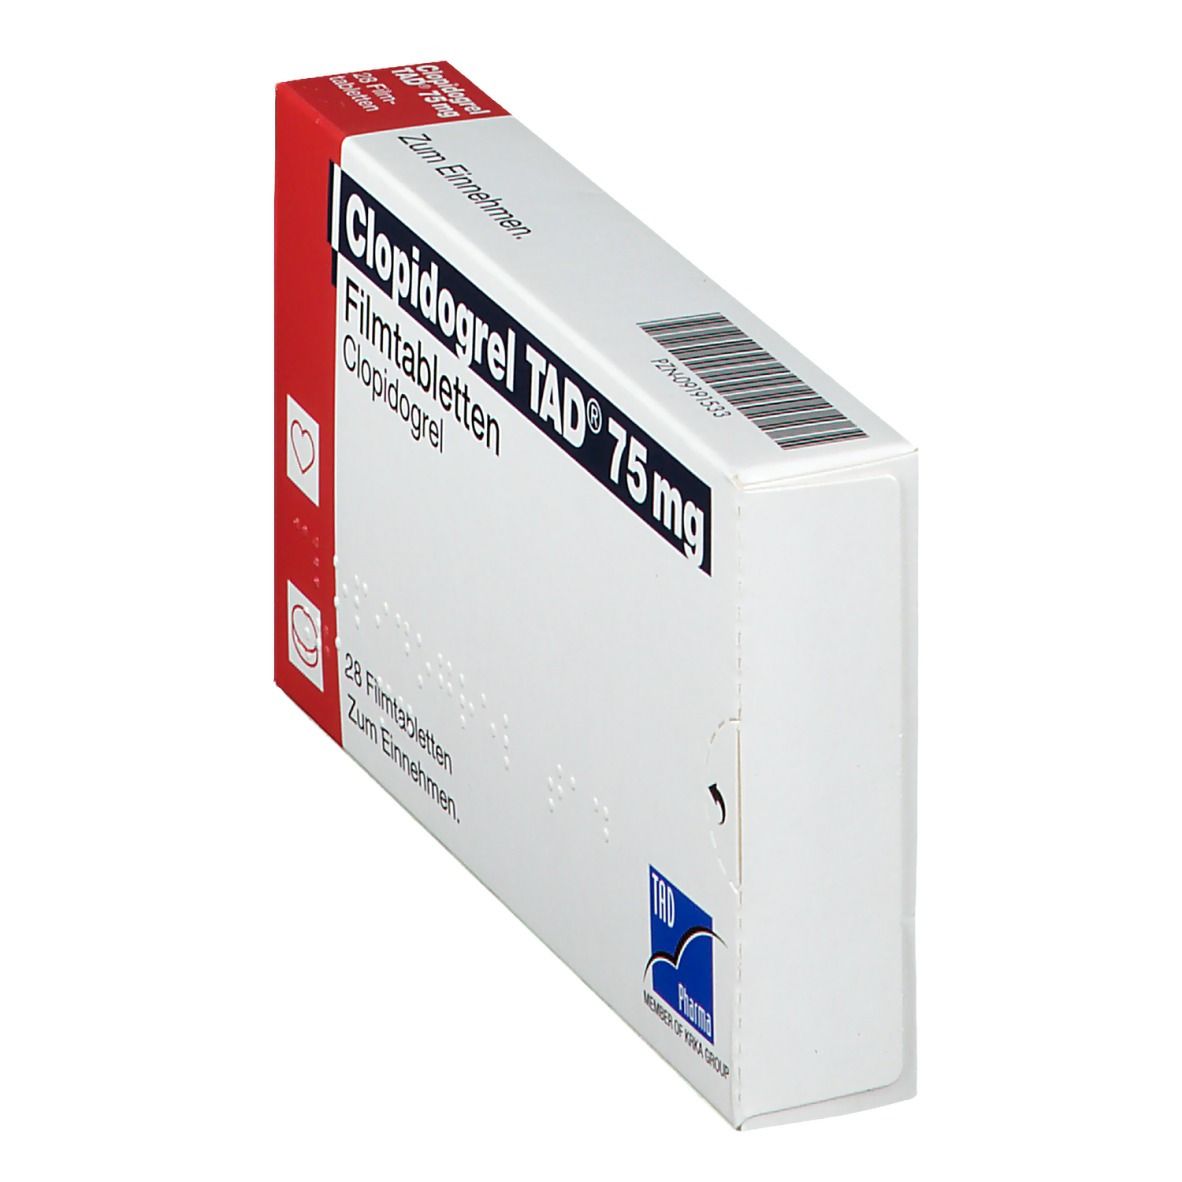 Clopidogrel TAD® 75 mg